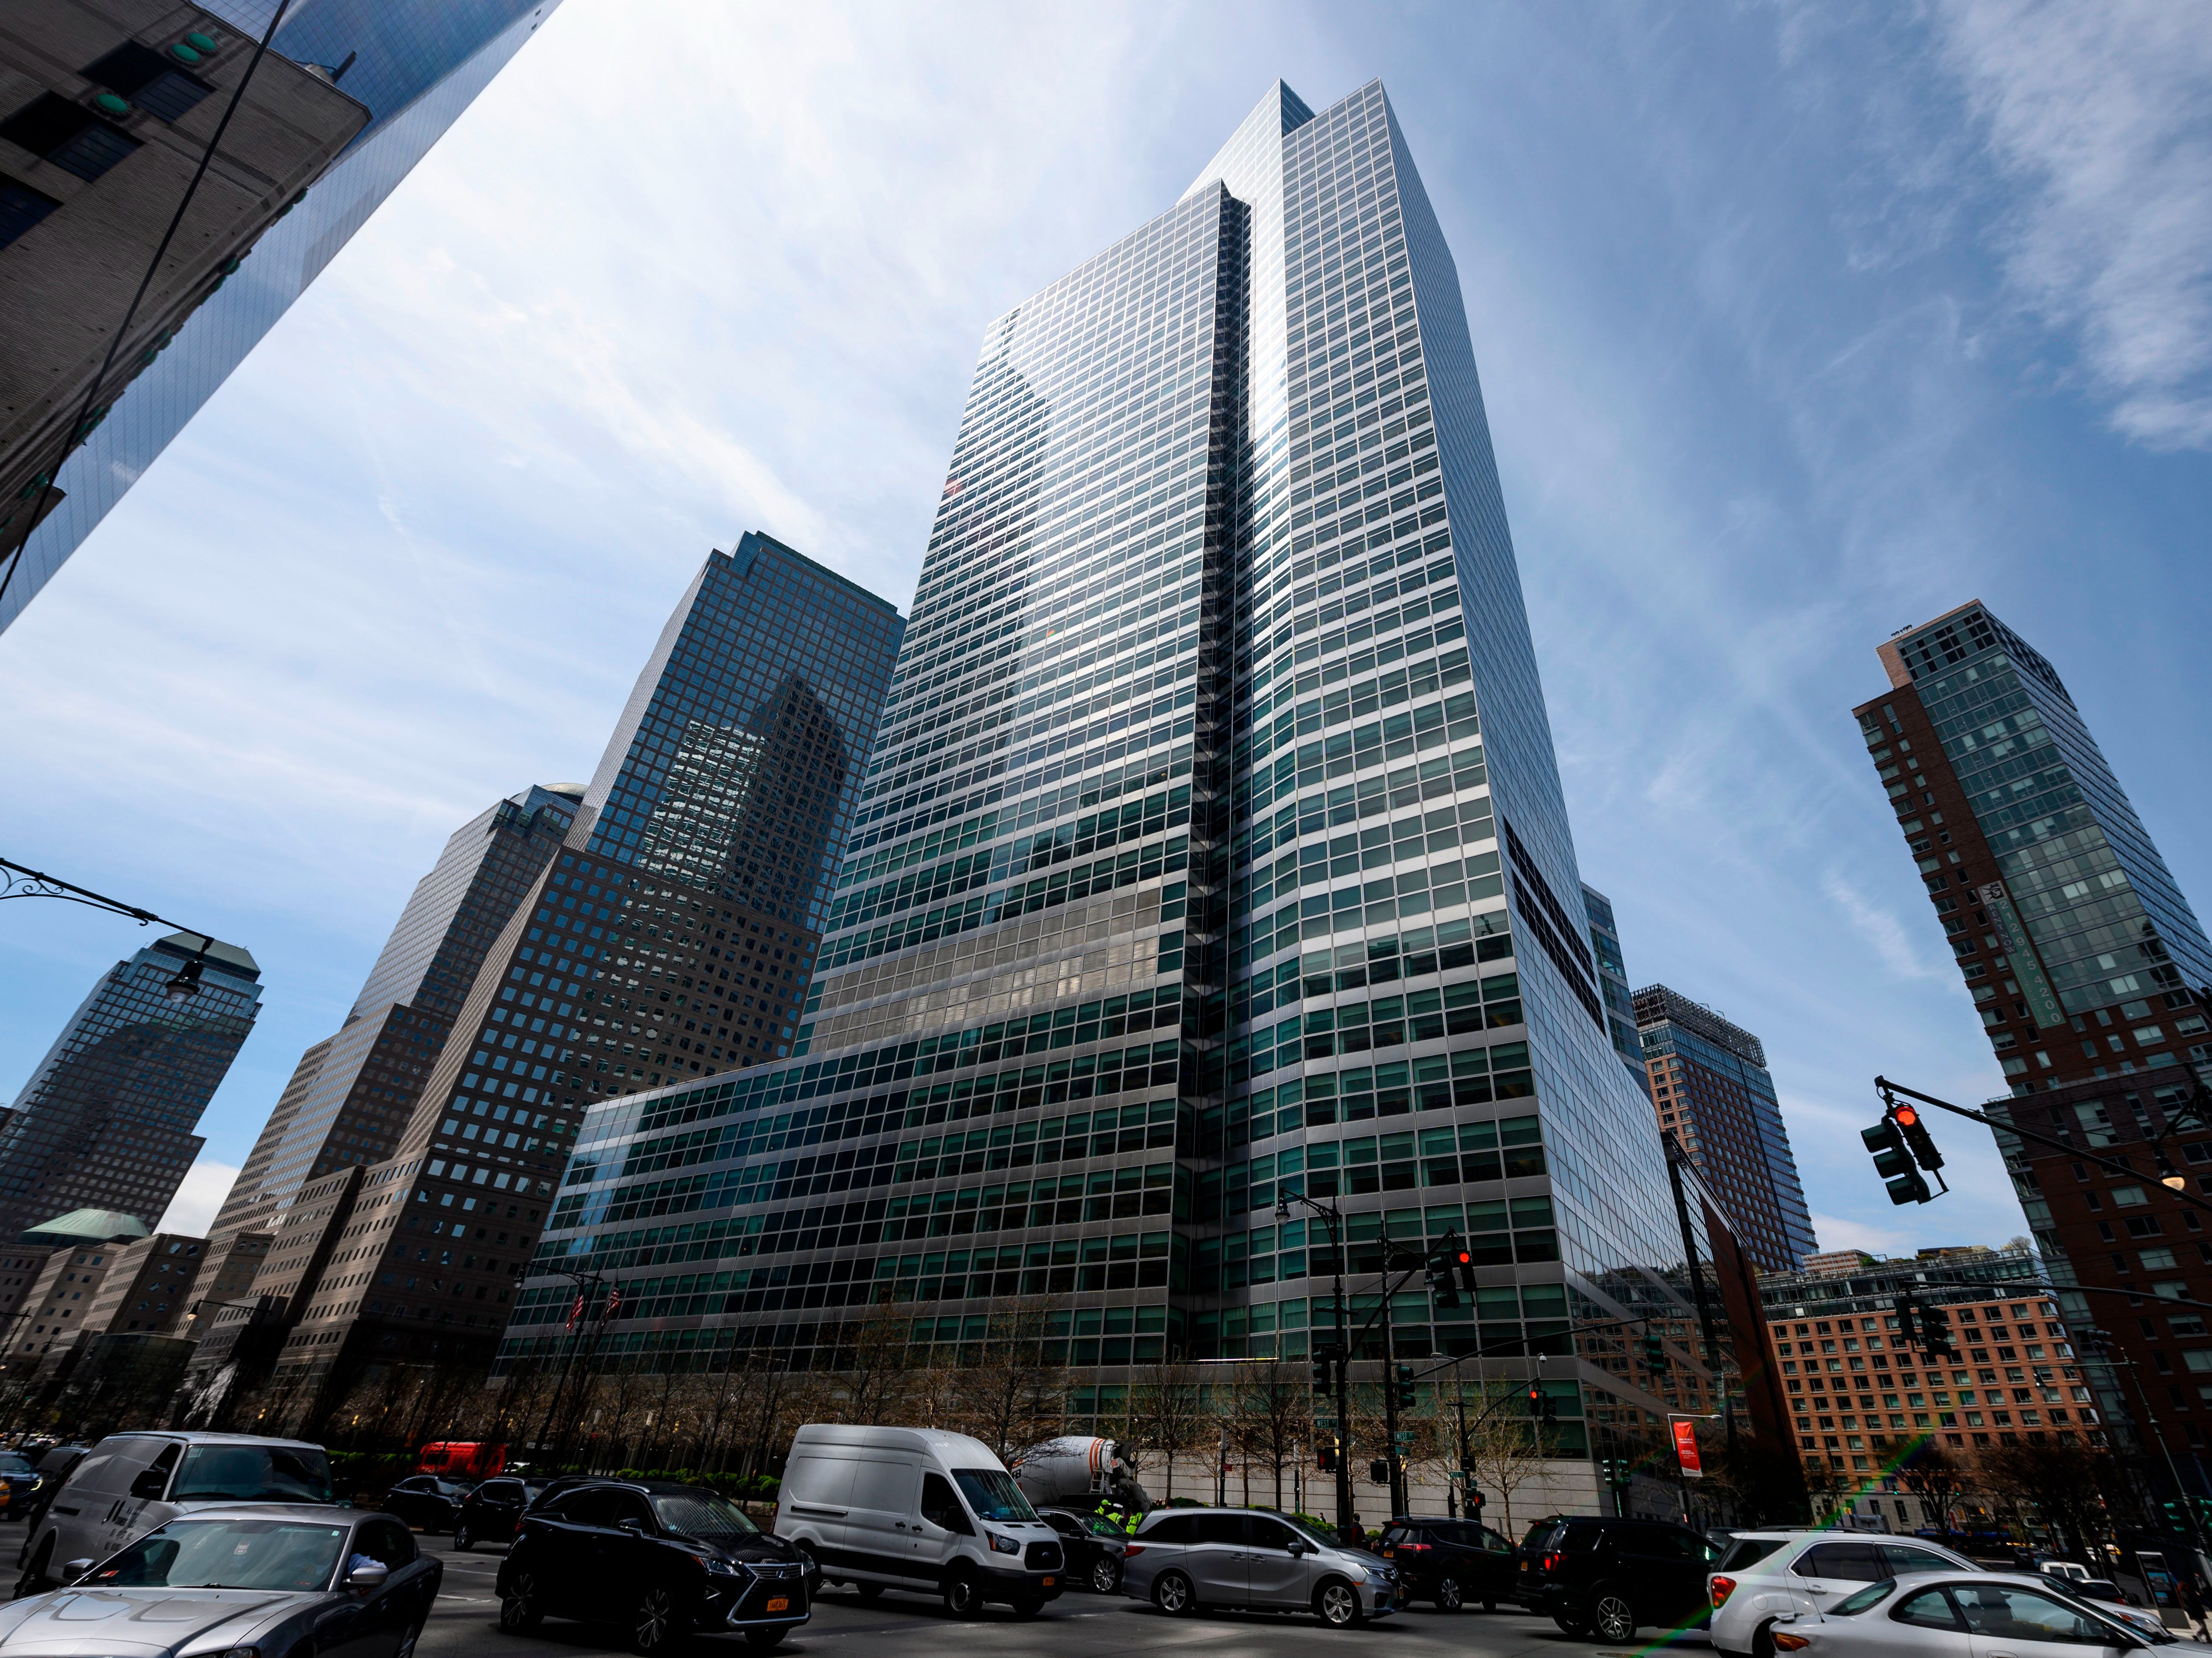 The headquarters of Goldman Sachs lower Manhattan, New York City